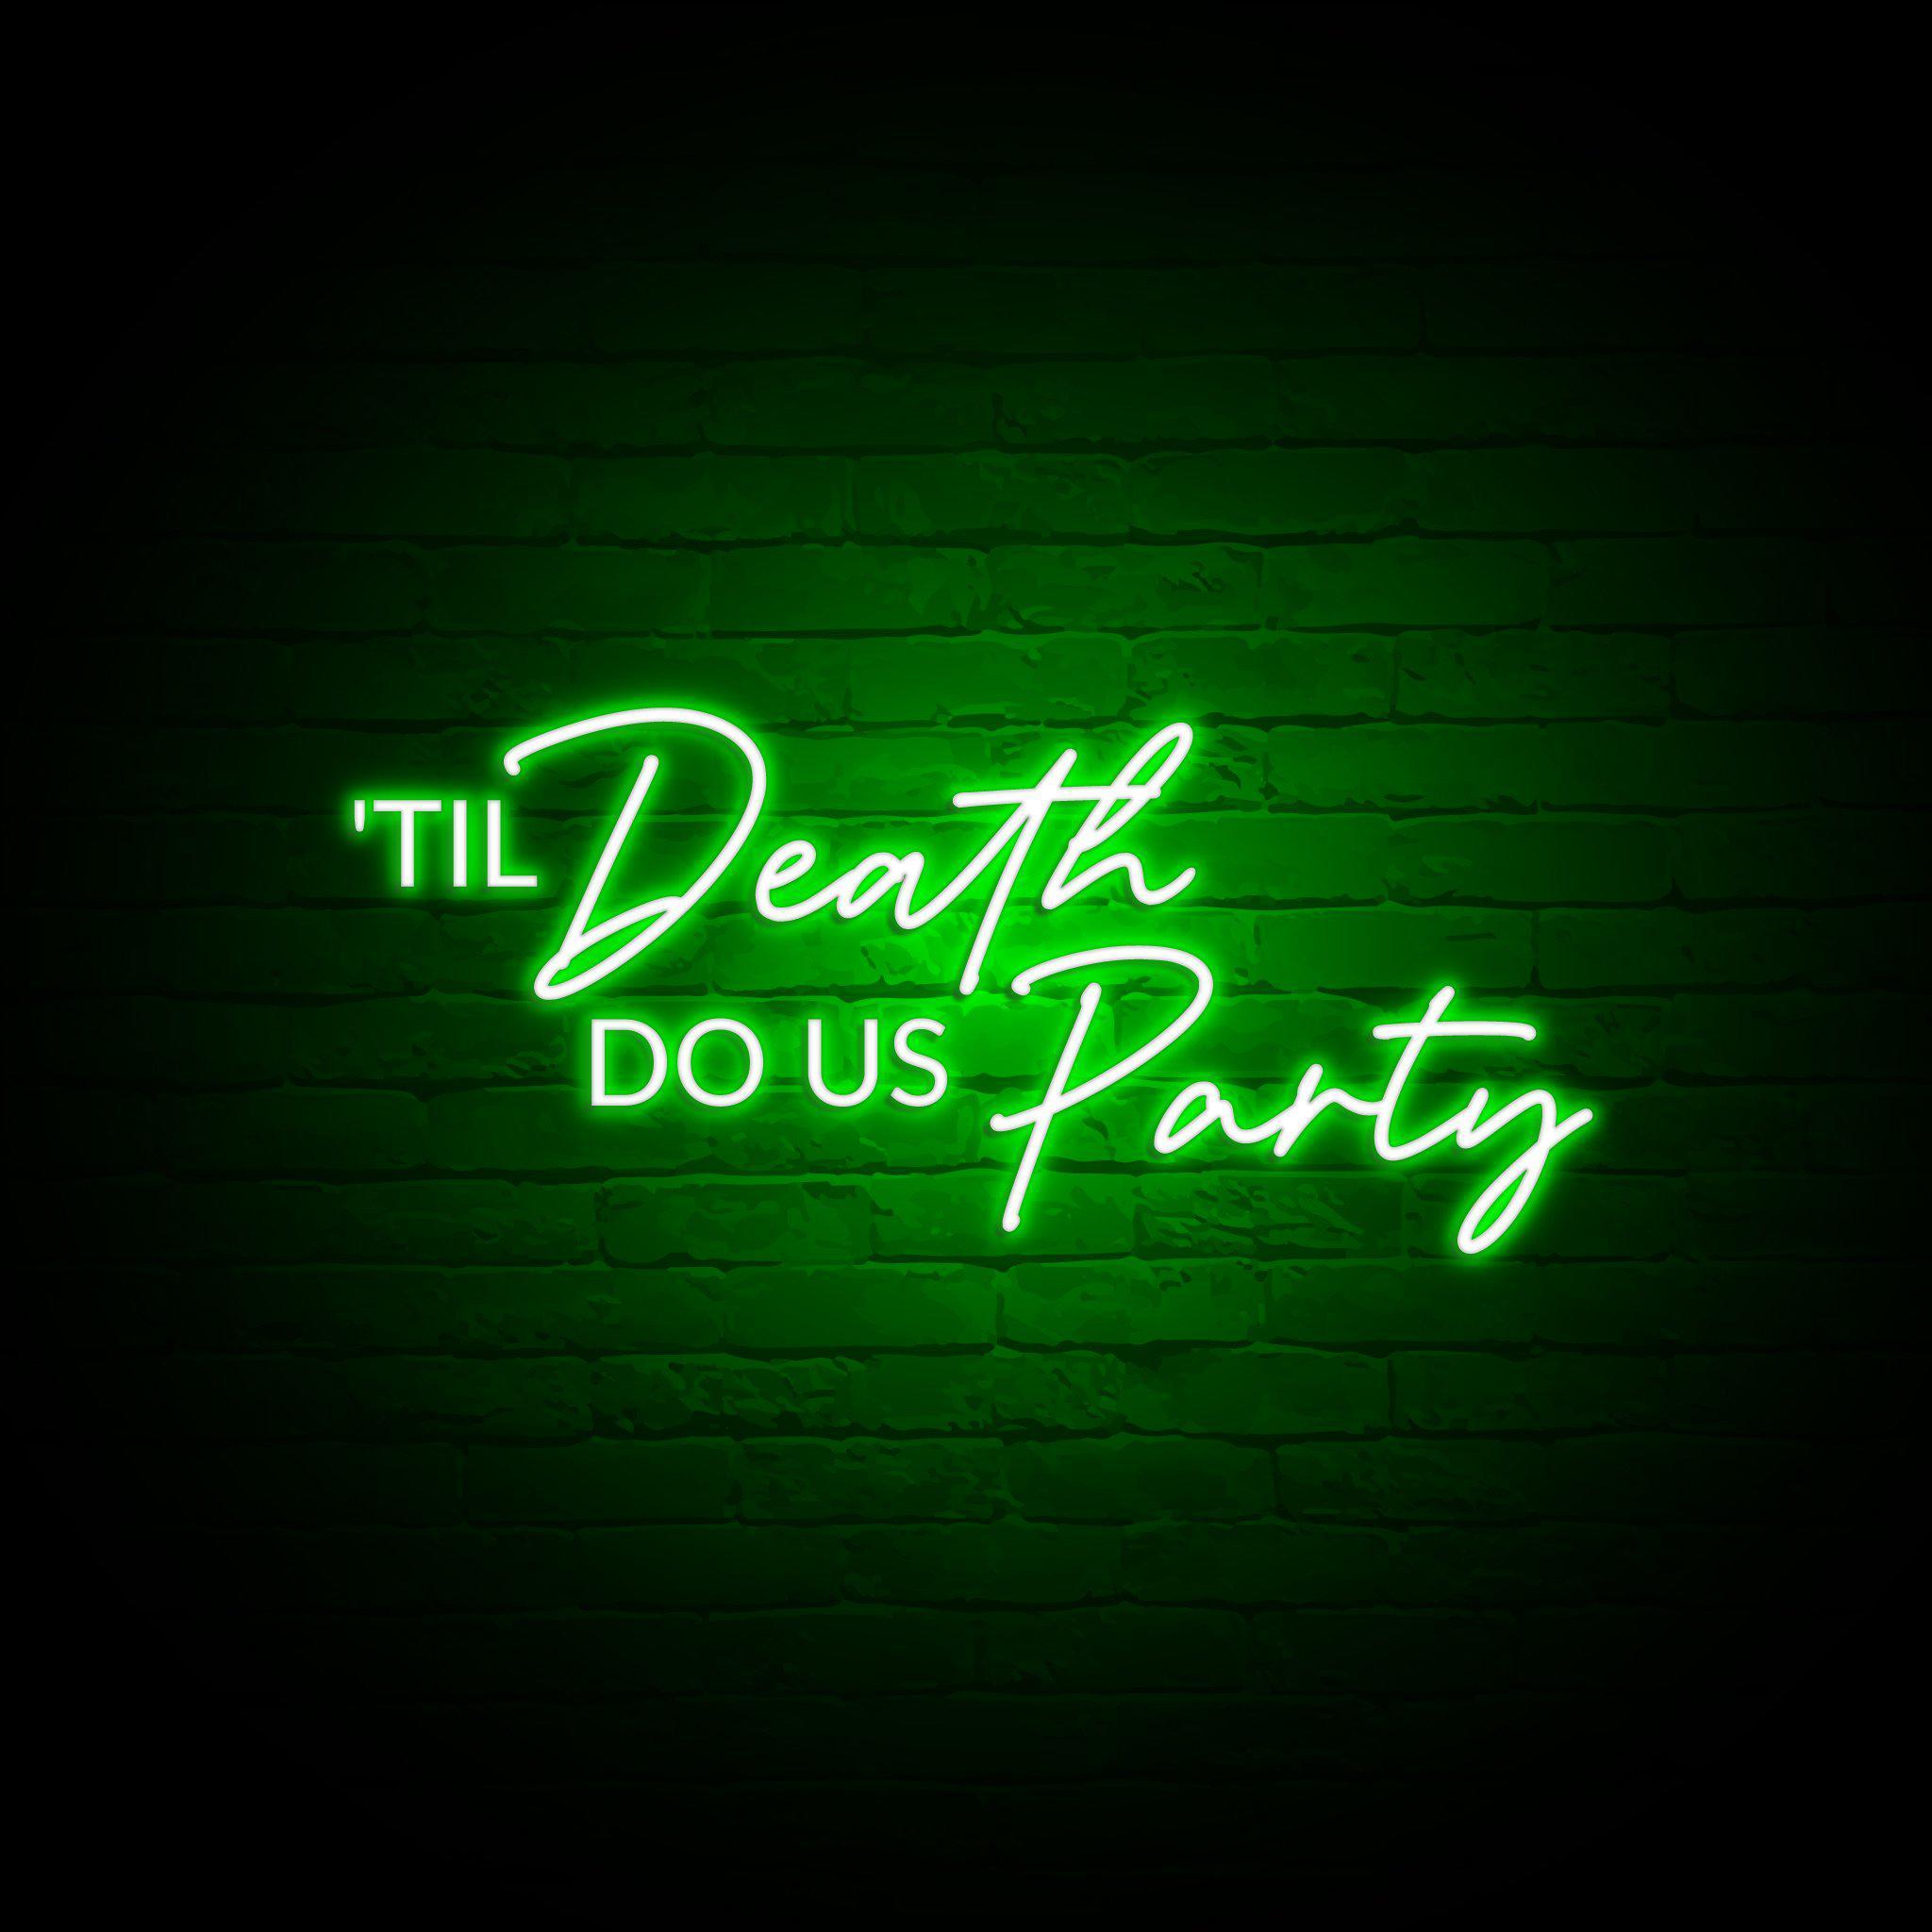 'TIL DEATH DO US PARTY' NEON SIGN